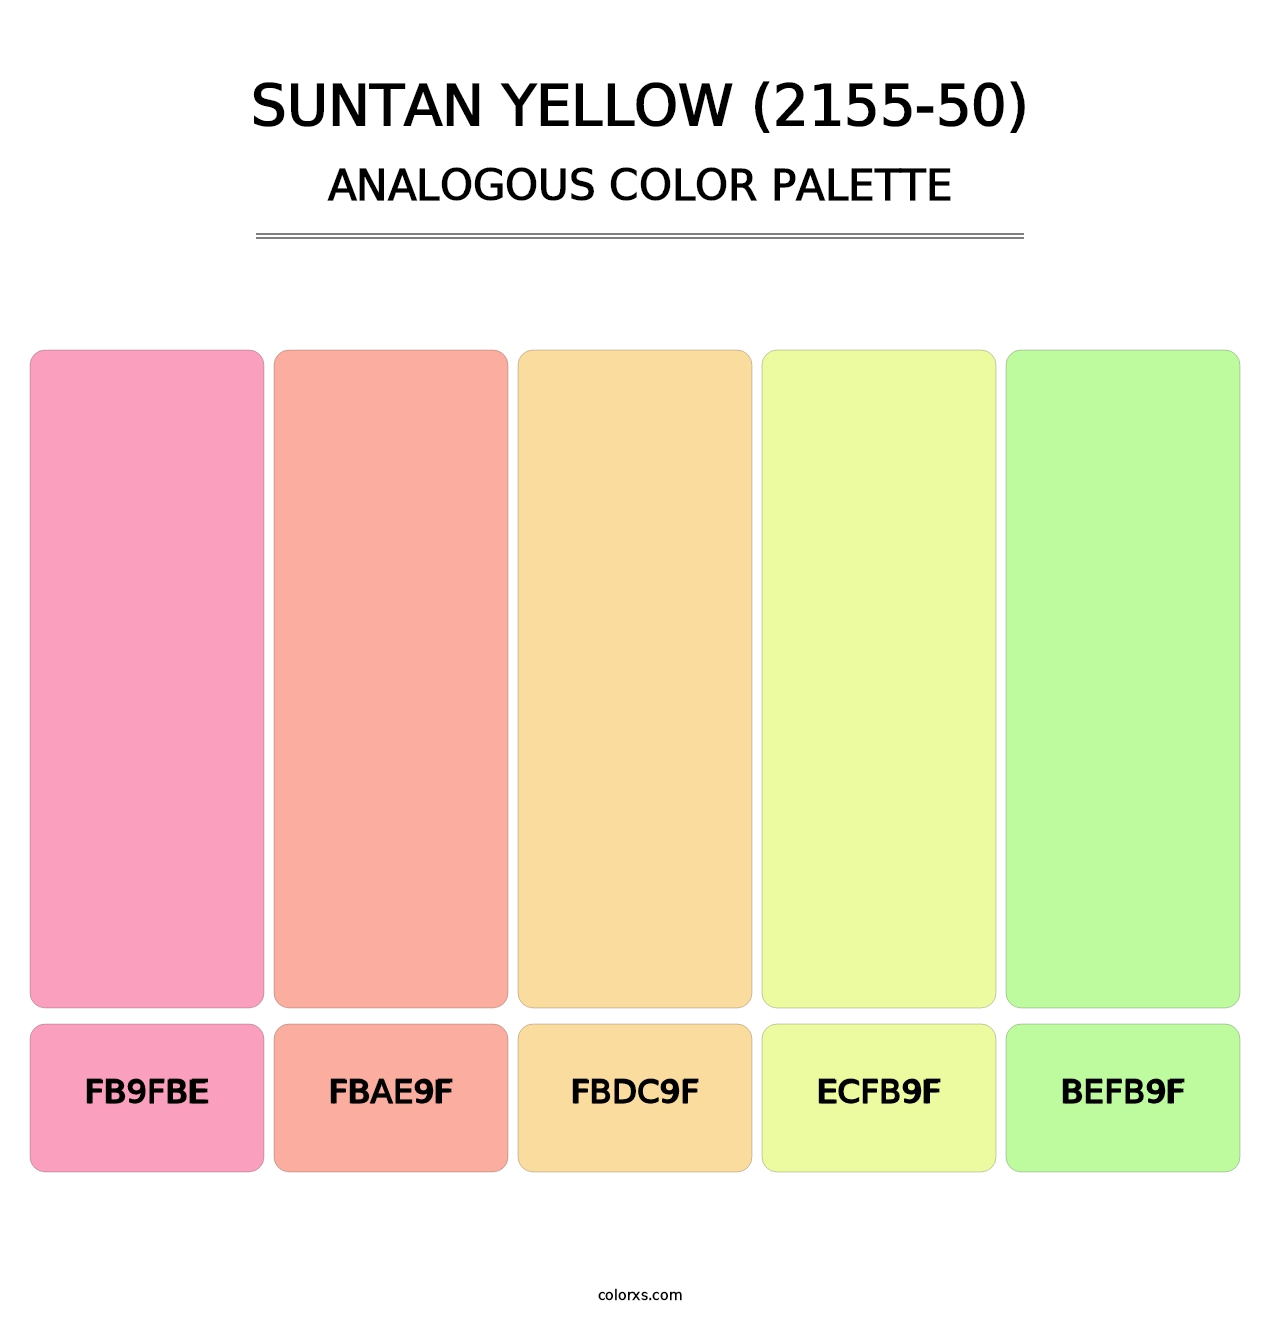 Suntan Yellow (2155-50) - Analogous Color Palette